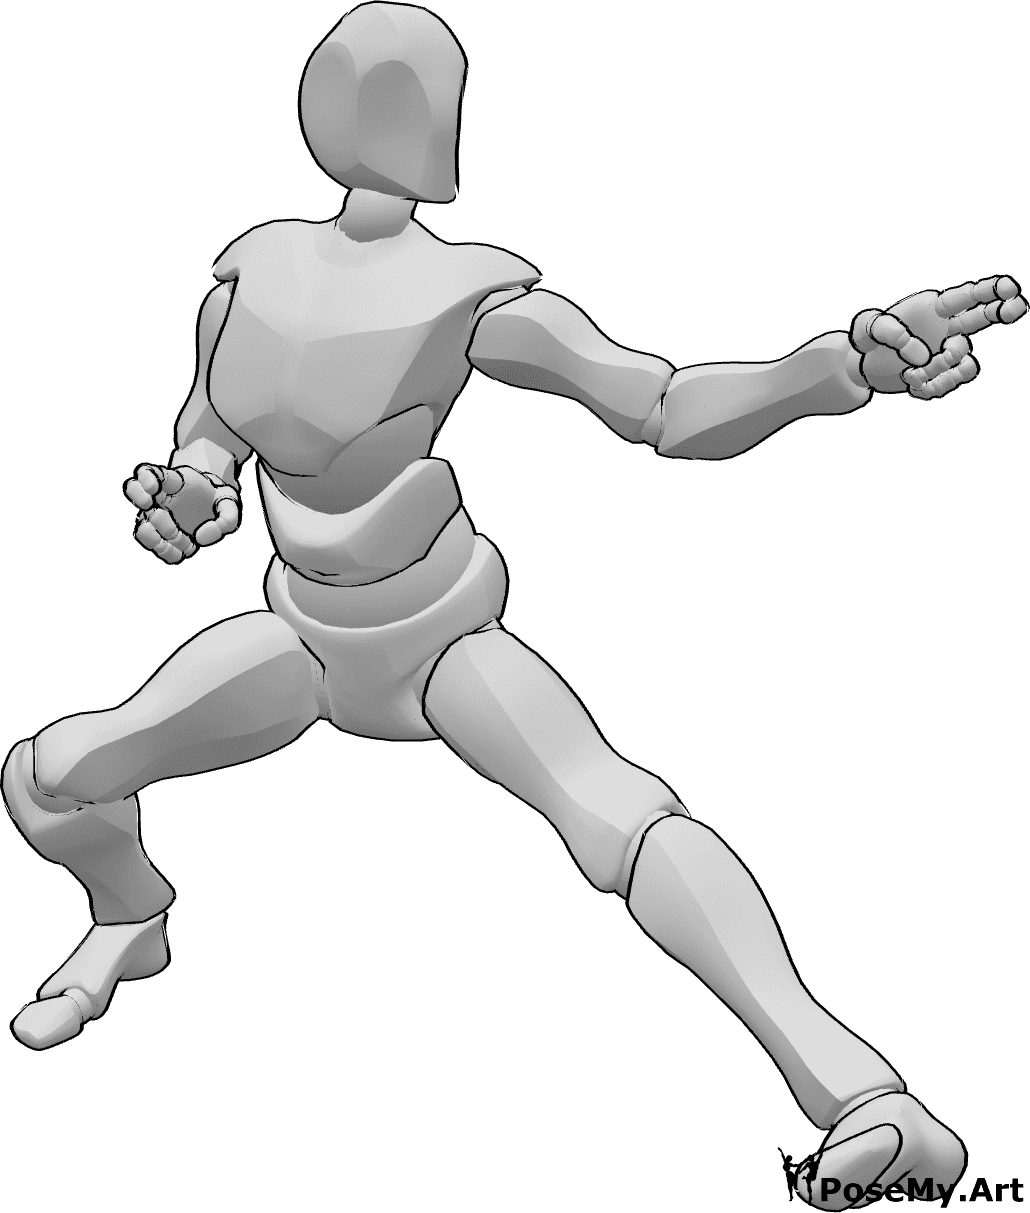 Download Kung Fu, Pose, Fighter. Royalty-Free Stock Illustration Image -  Pixabay